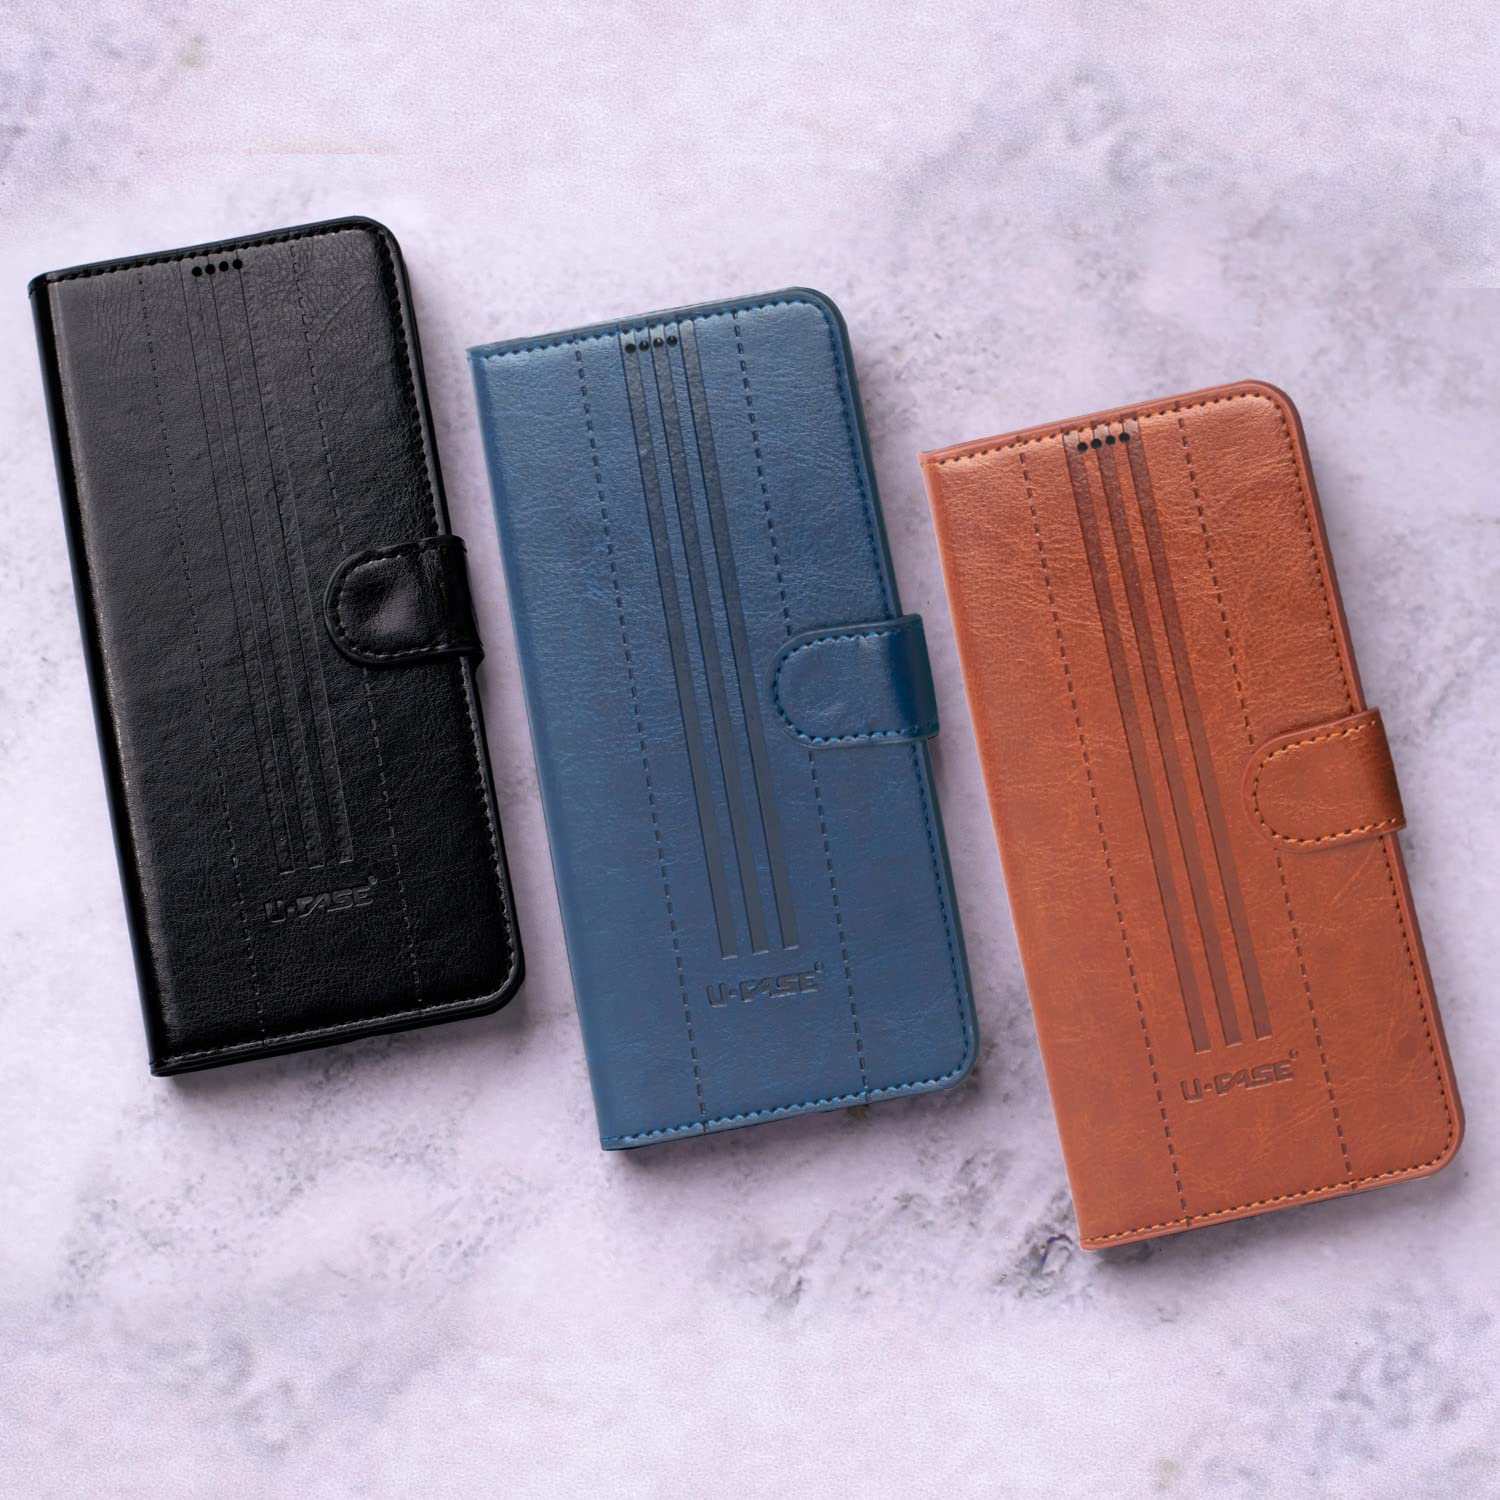 Shop U-CASE Flip Cover for Vivo S1 Vegan Foldable Stand & Pocket Magnetic Closure colors